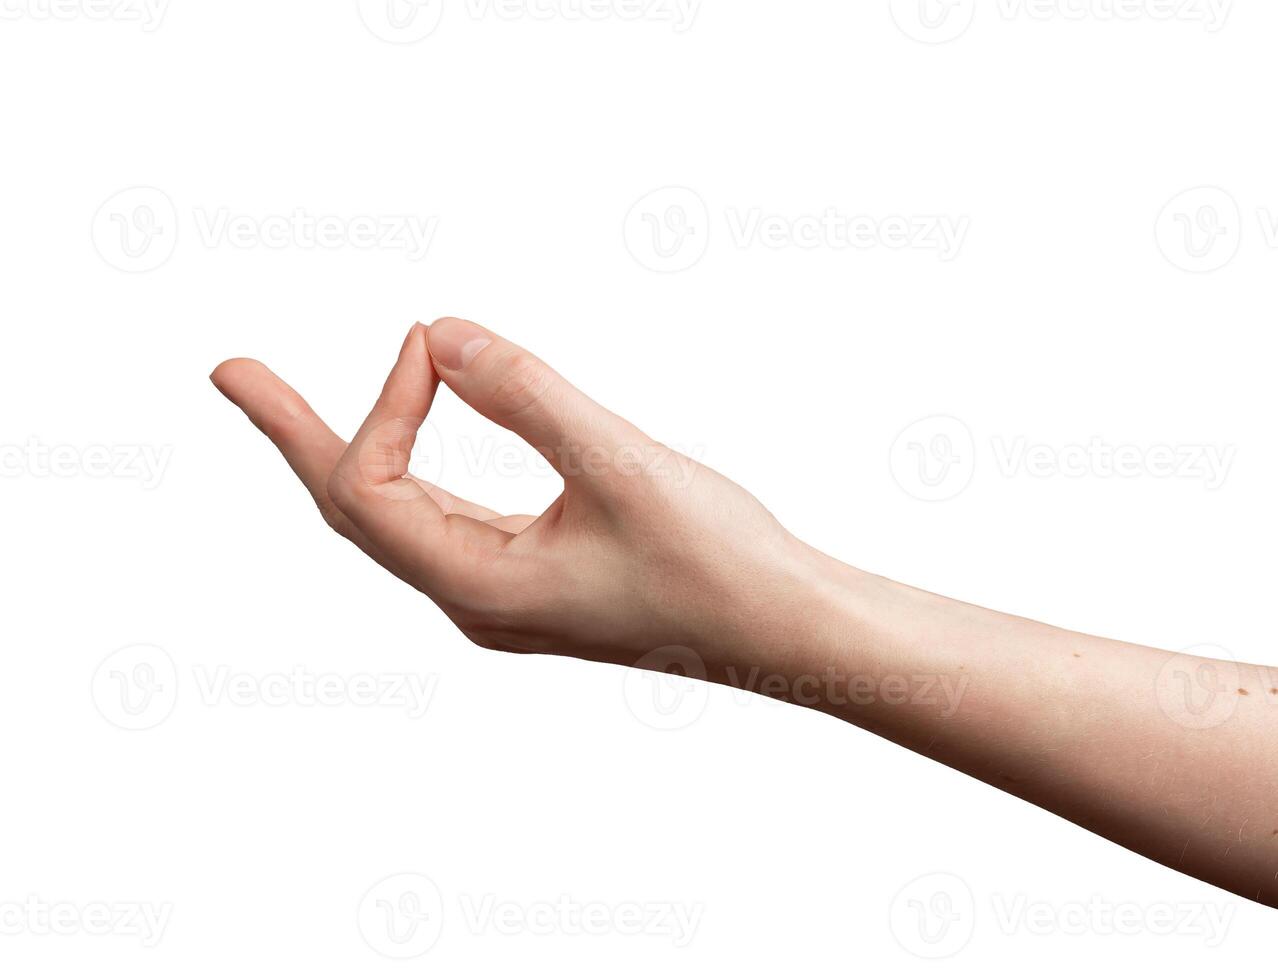 Zen, yoga hand gesture isolated on white photo